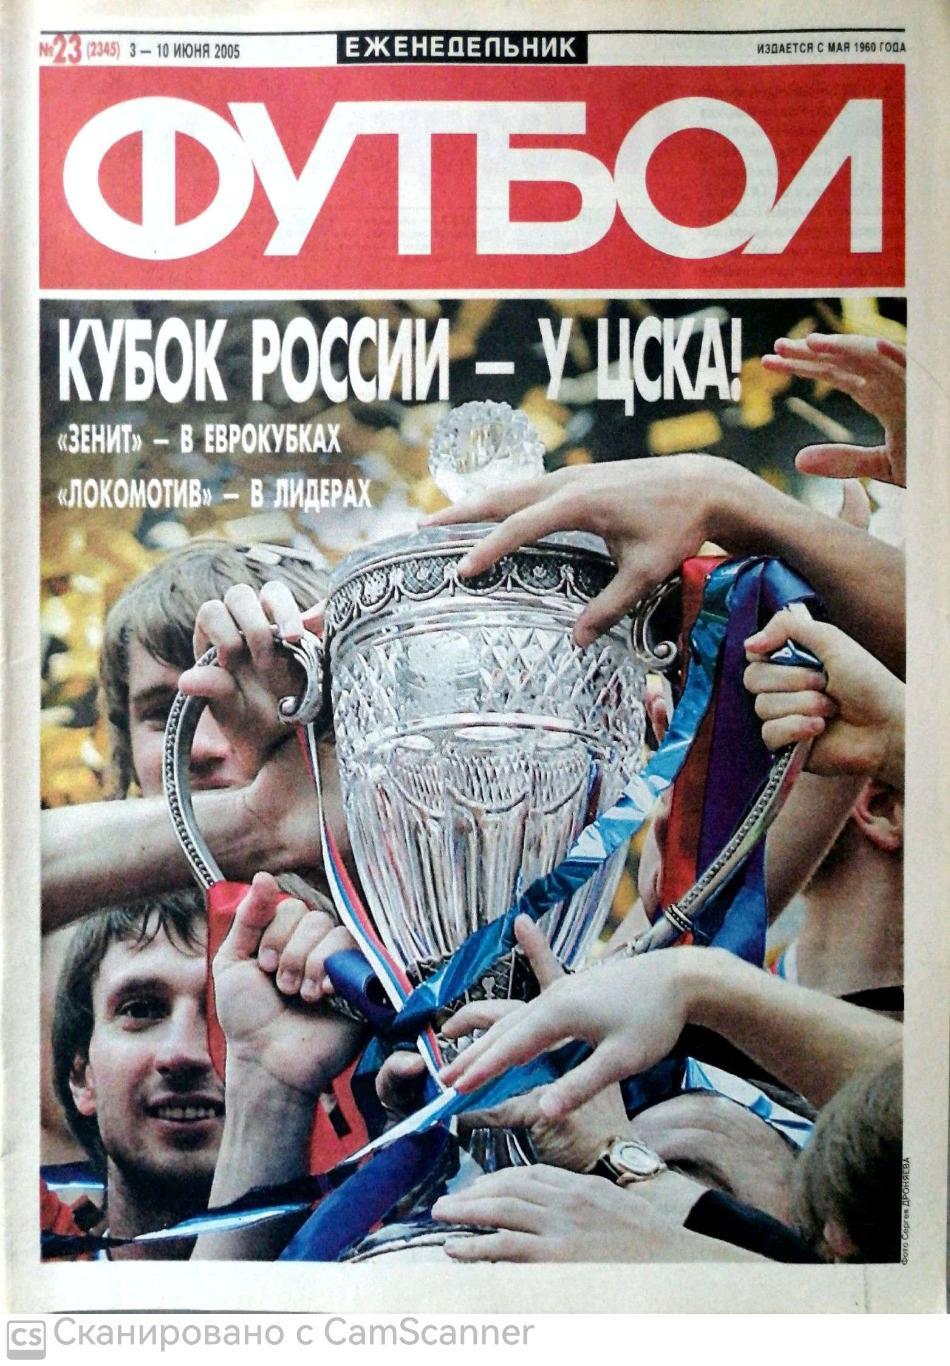 Еженедельник «Футбол» (Москва). 2005 год. №23 цска - химки